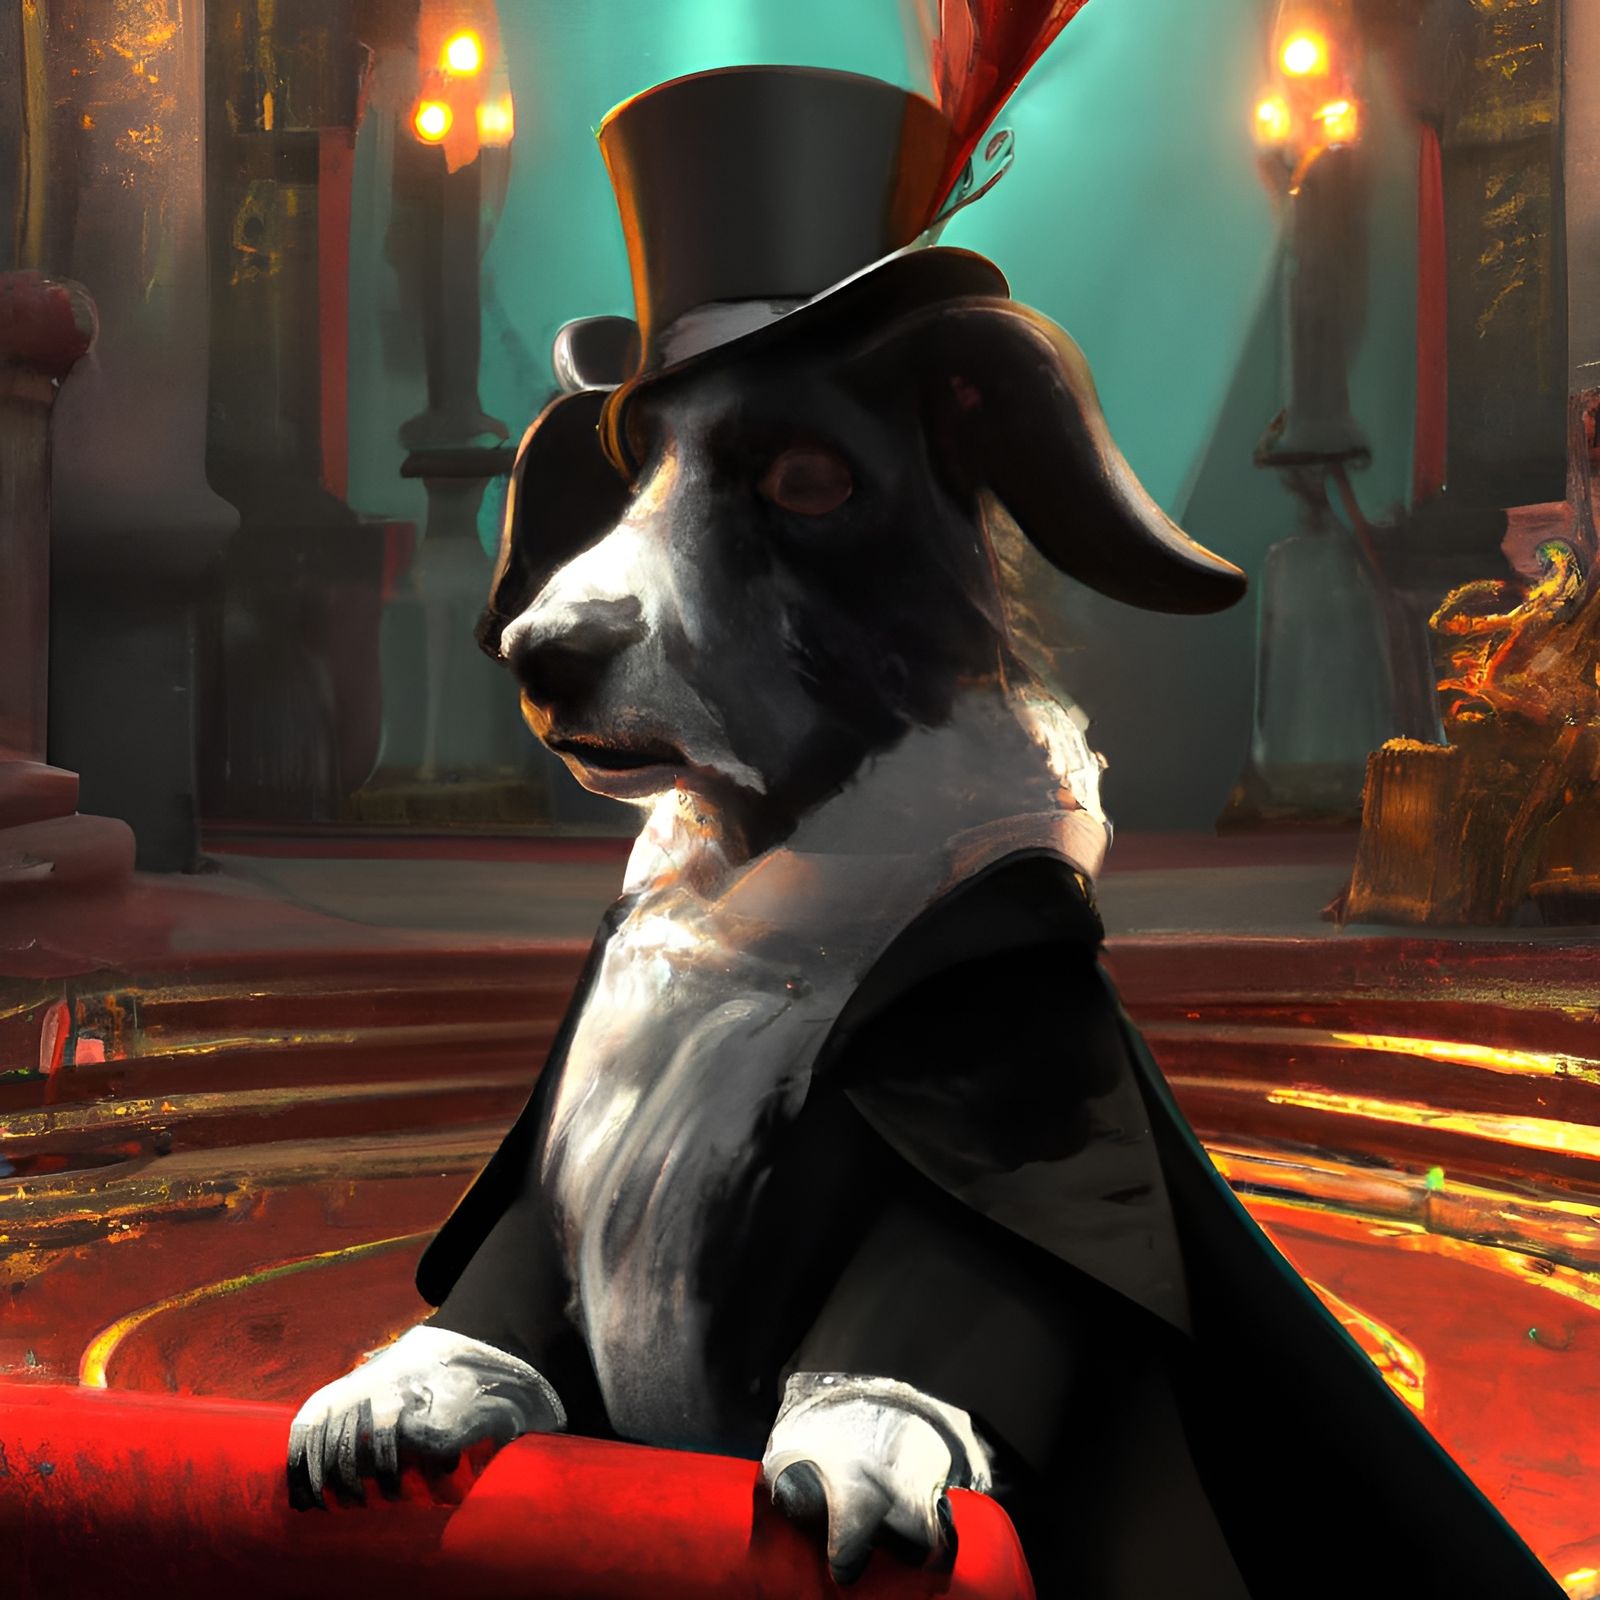 Professor Dog attends the opera